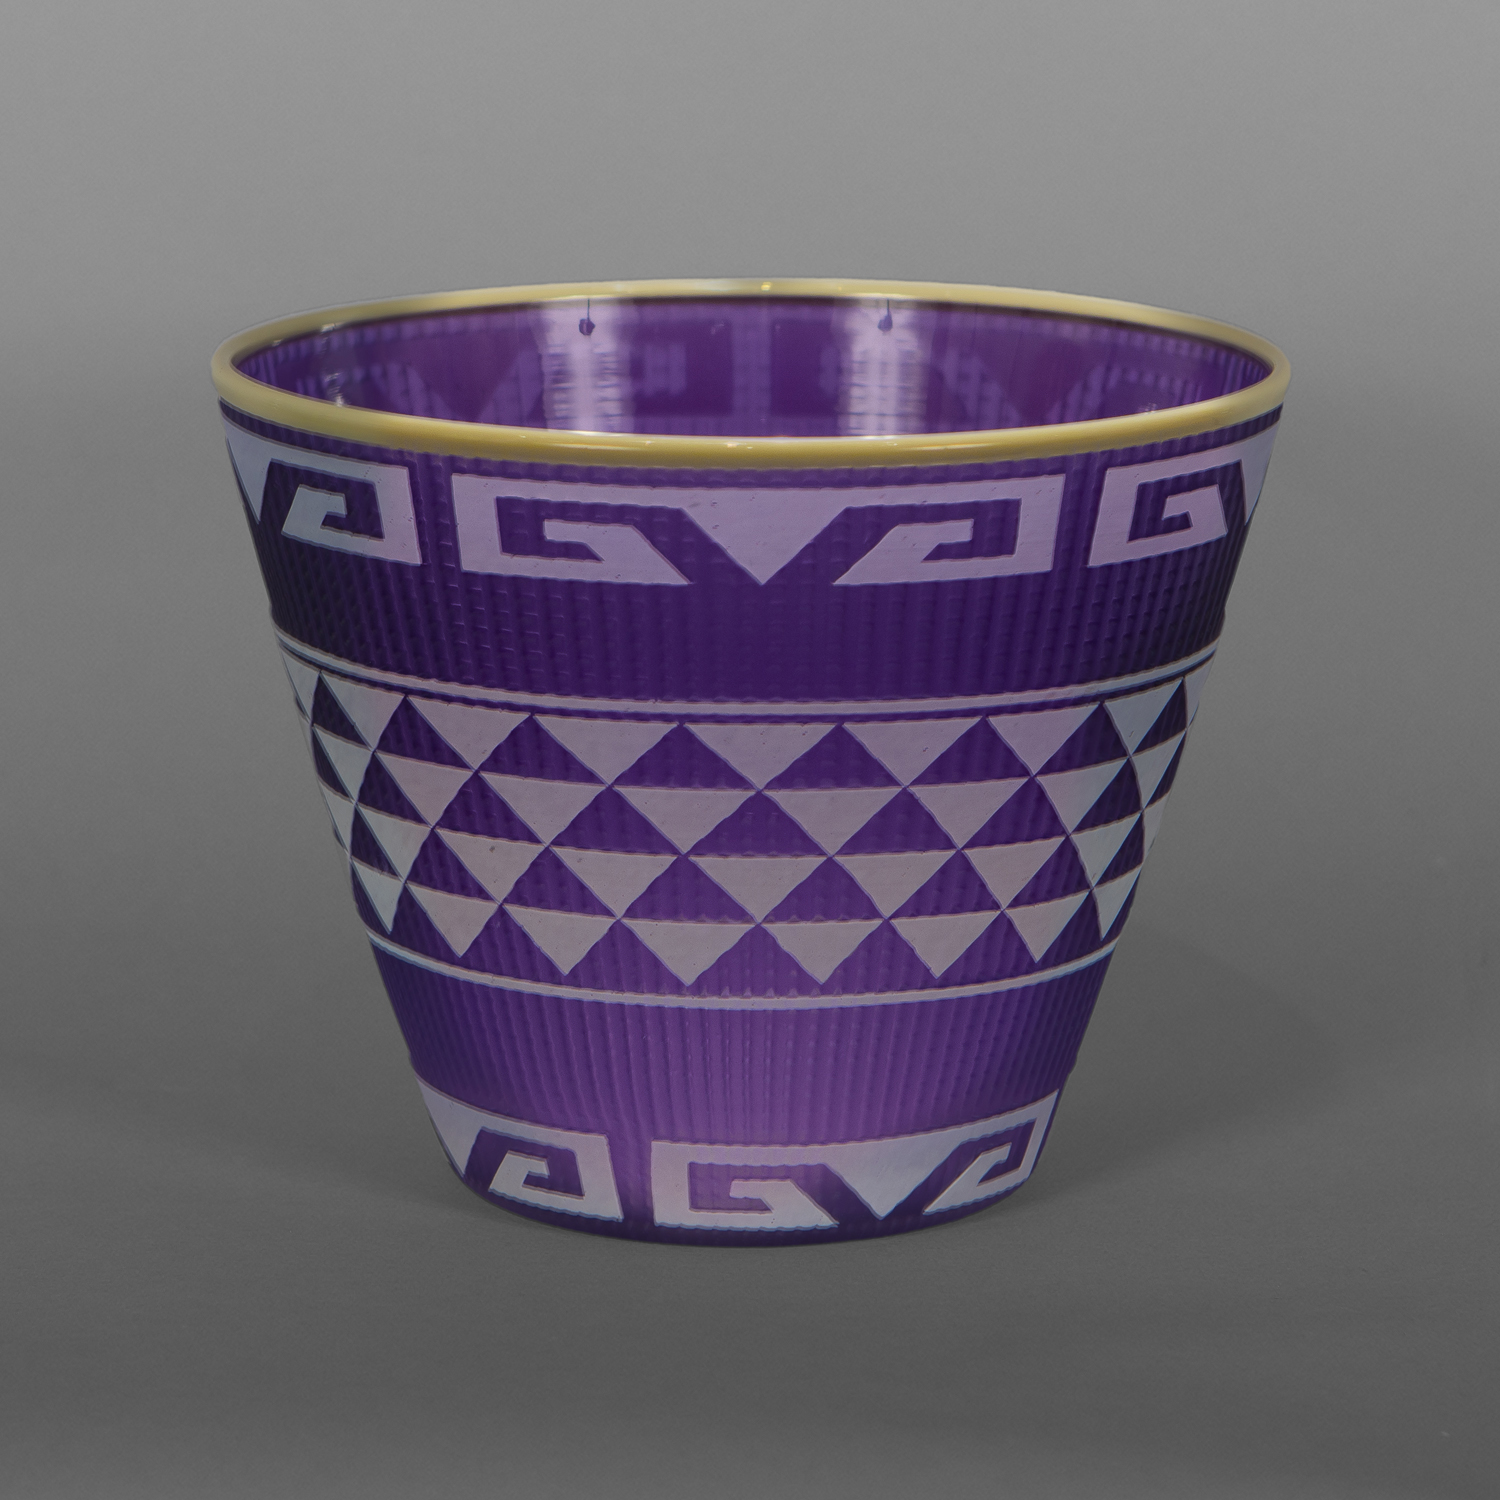 Purple & Grey Basket
Preston Singletary
TlingitBlown & sand-carved glass
5½" x 4¾"
$3500